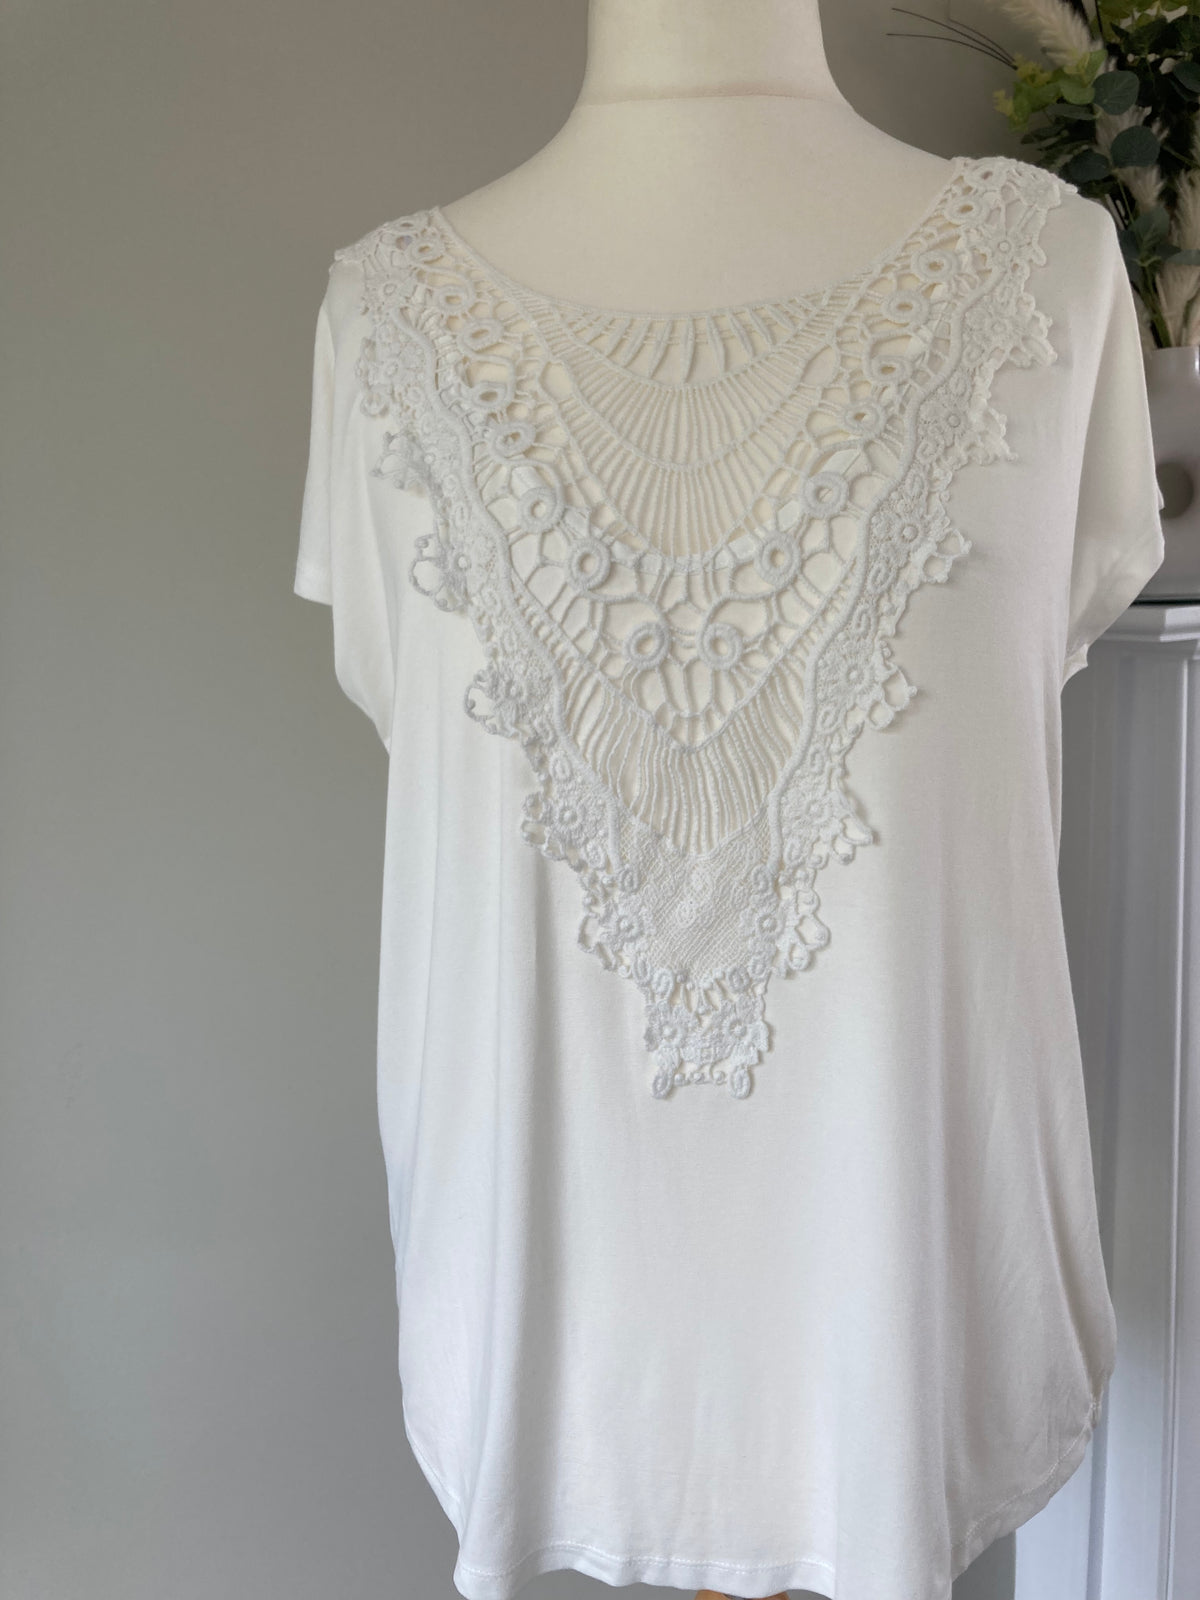 Ivory lace tunic top by BONPRIX